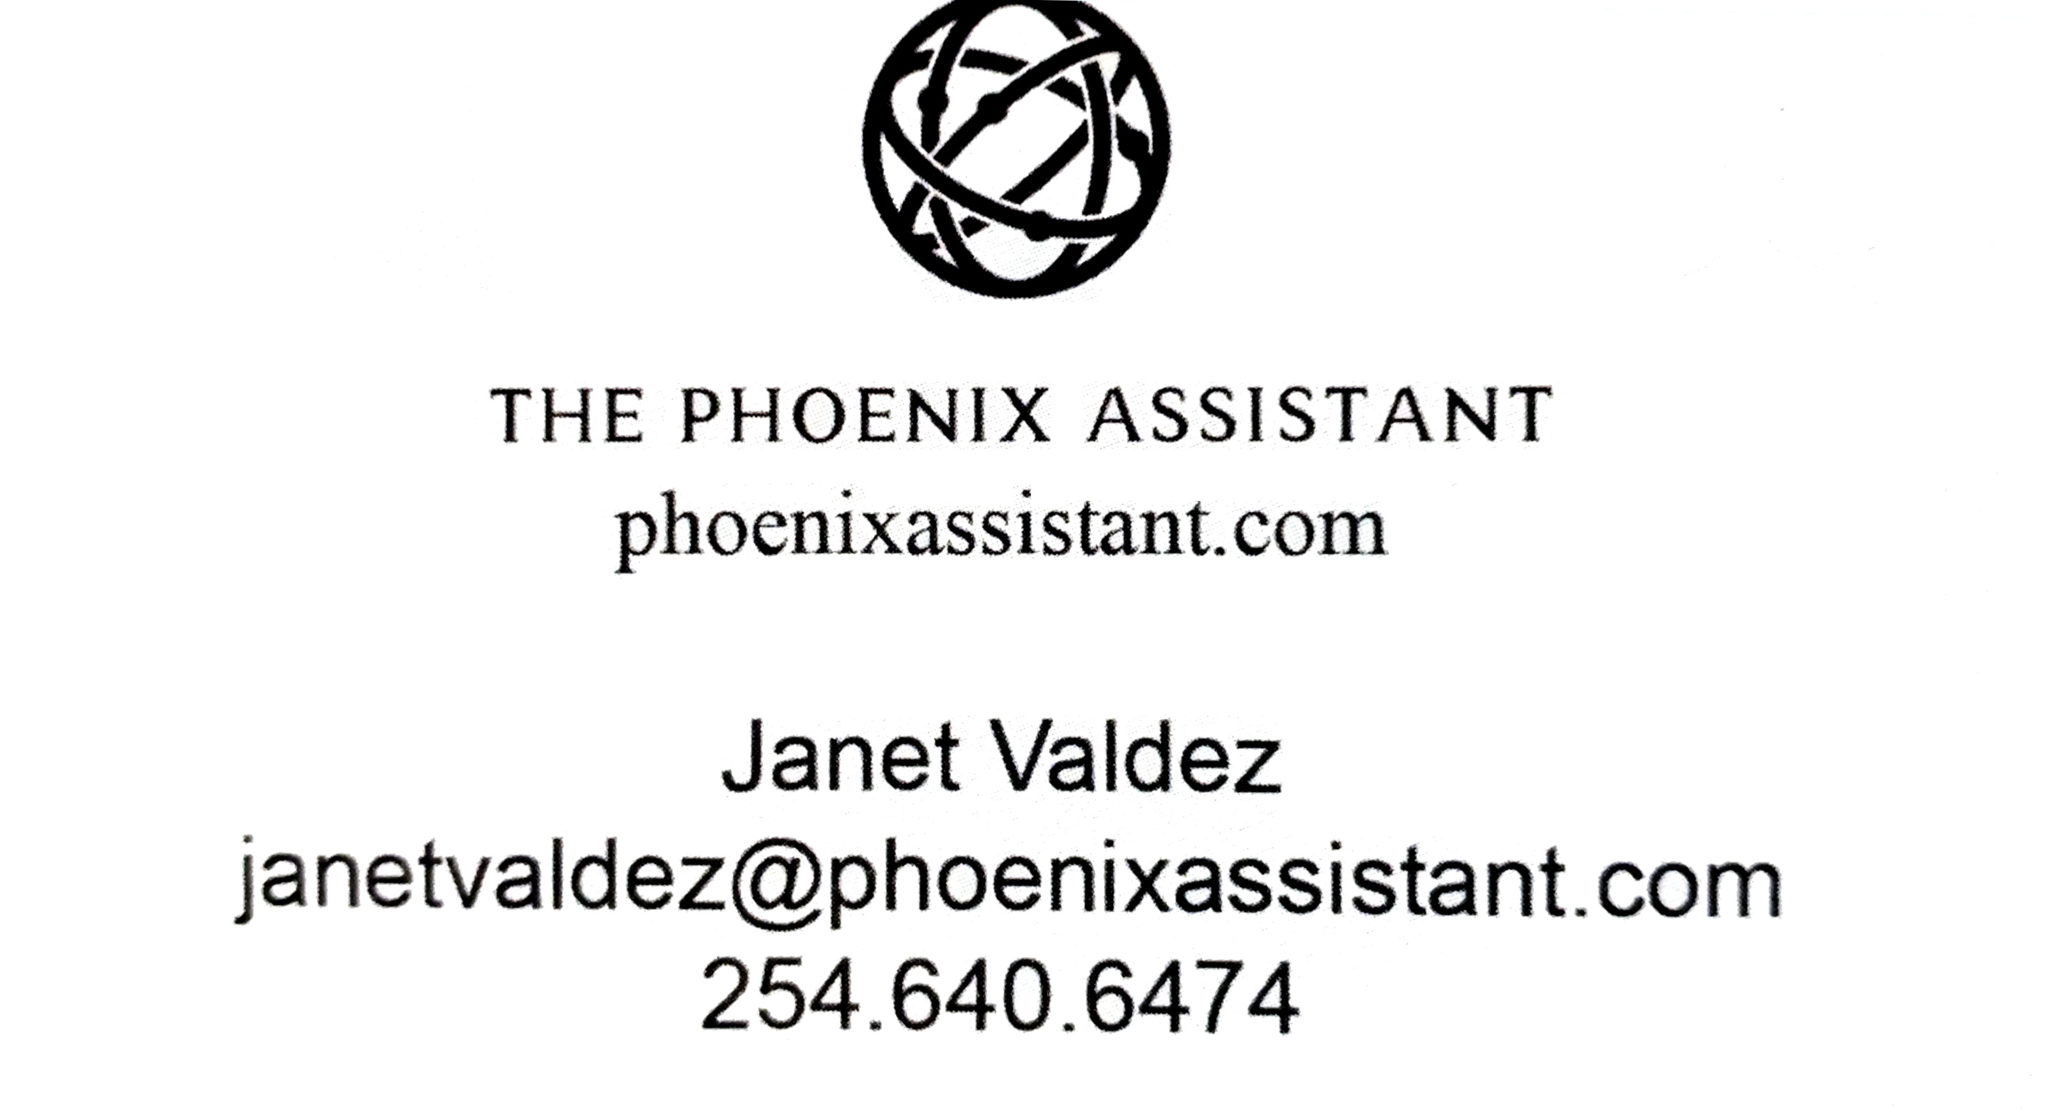 Phoenix Assistant Waco Texas - Janet Valdez